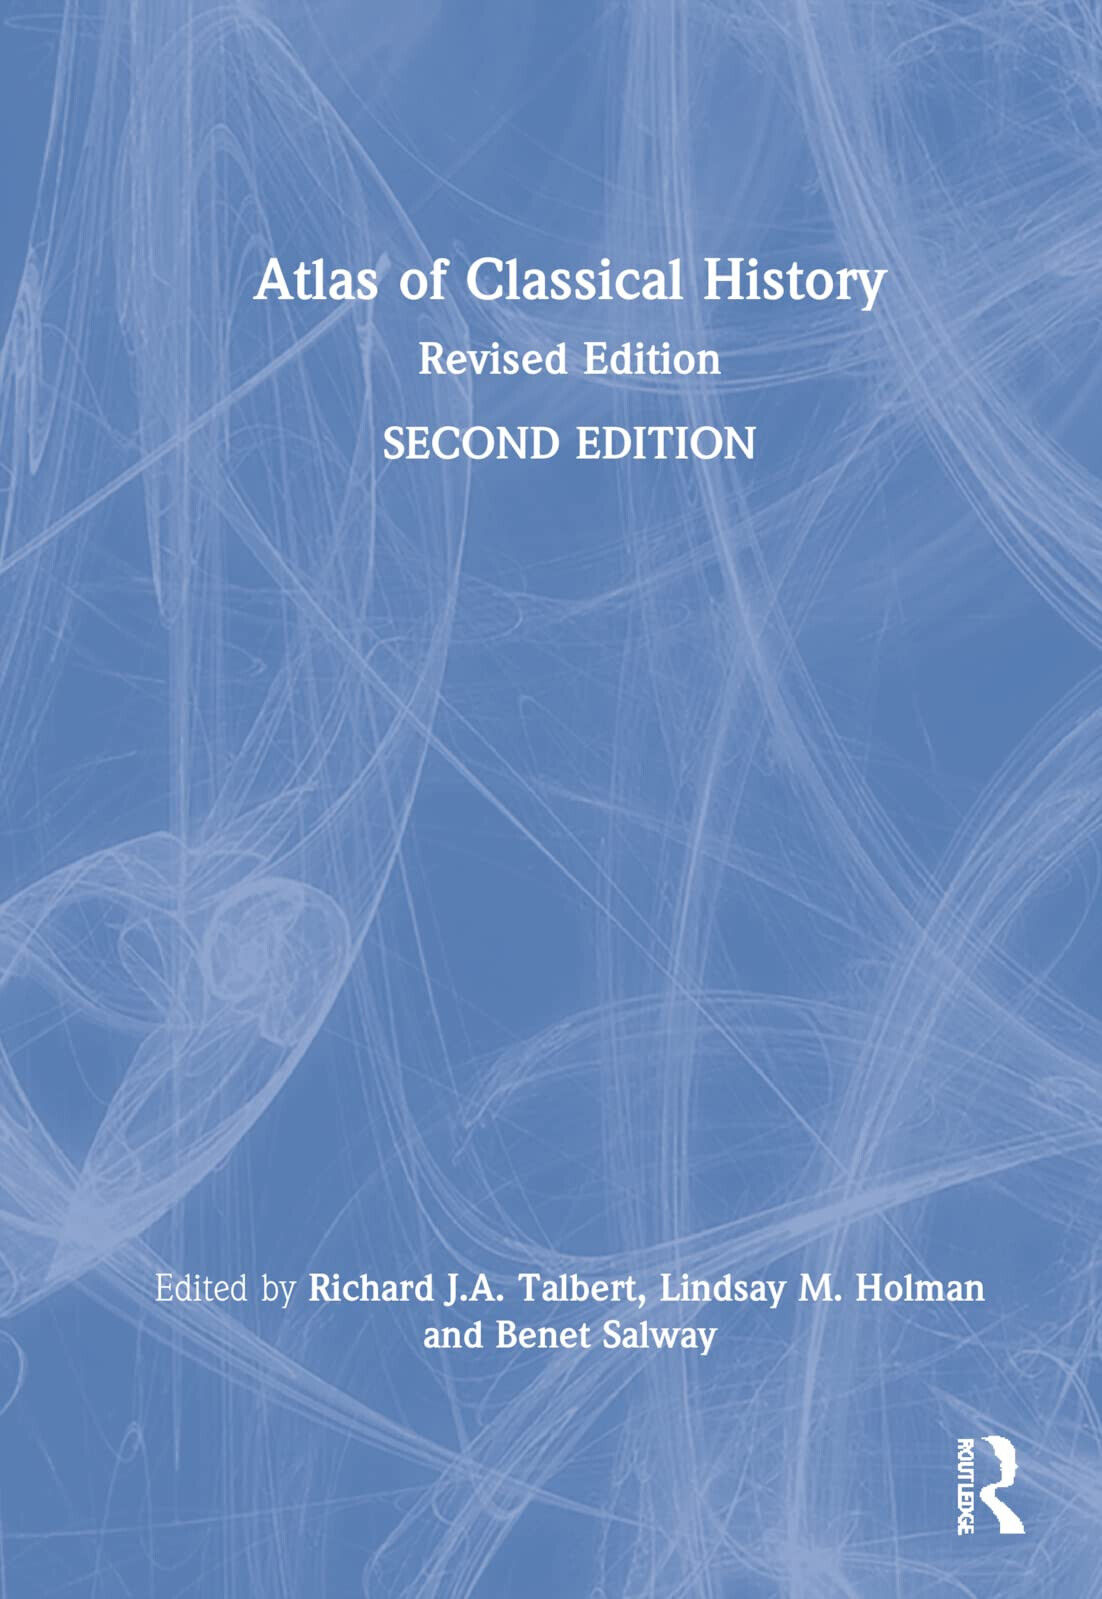 Atlas Of Classical History - Benet Salway - Routledge, 2022